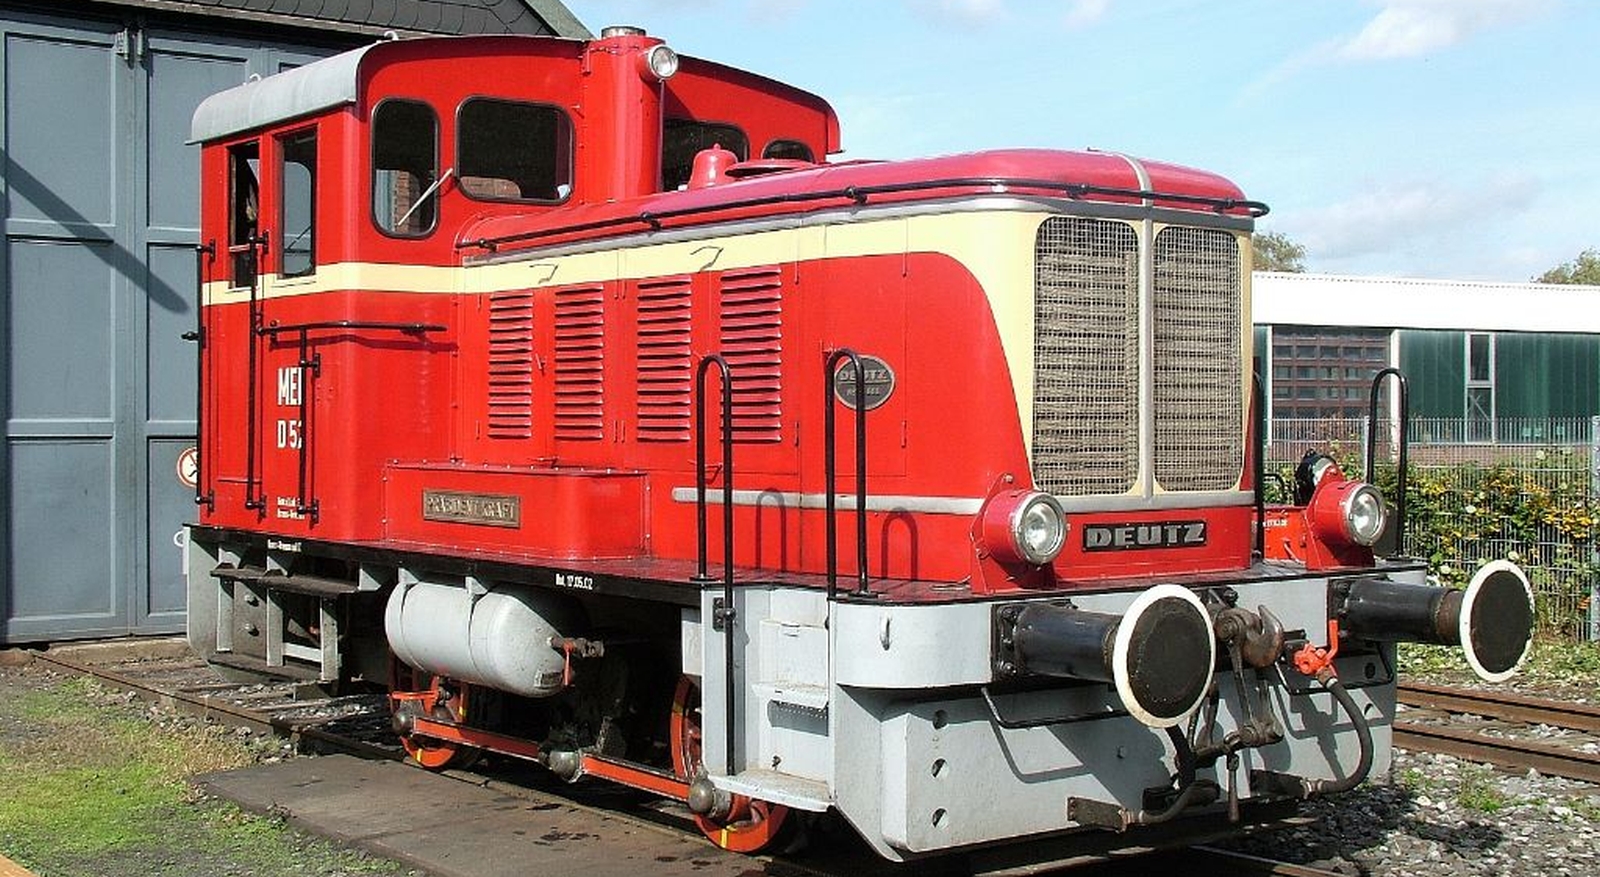 T4M 625 R of the Bossel–Blankenstein light railway at the Hamm museum railway